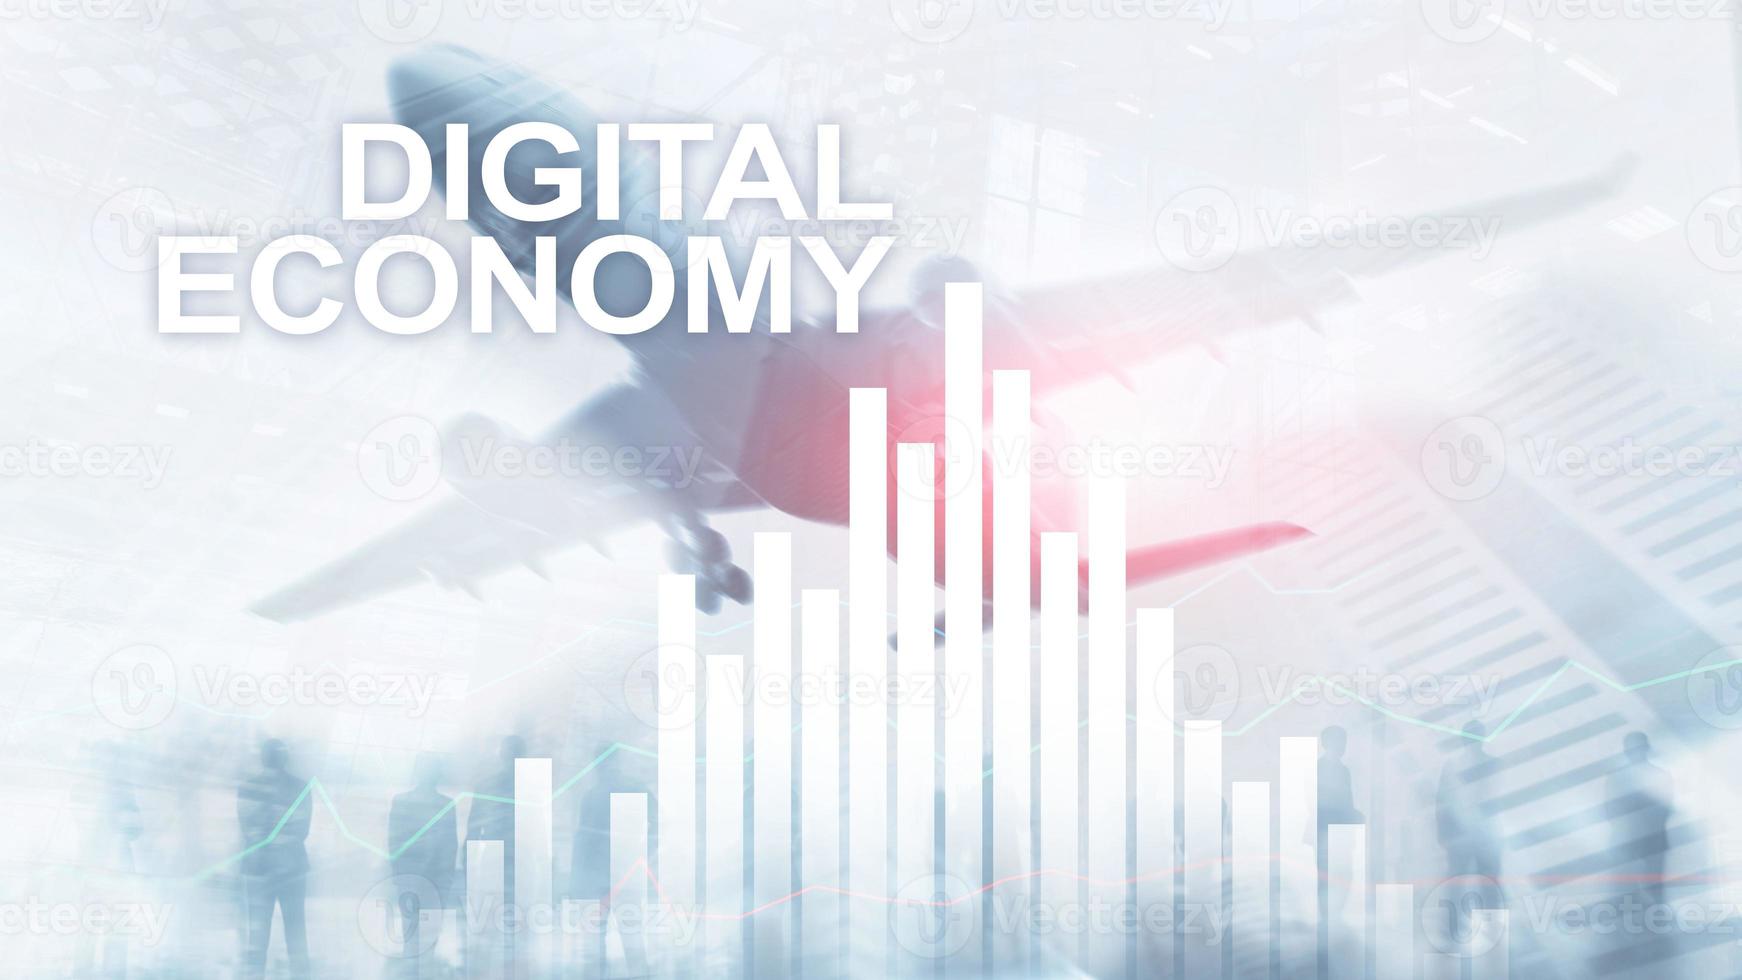 economia digital, conceito de tecnologia financeira no fundo desfocado. foto